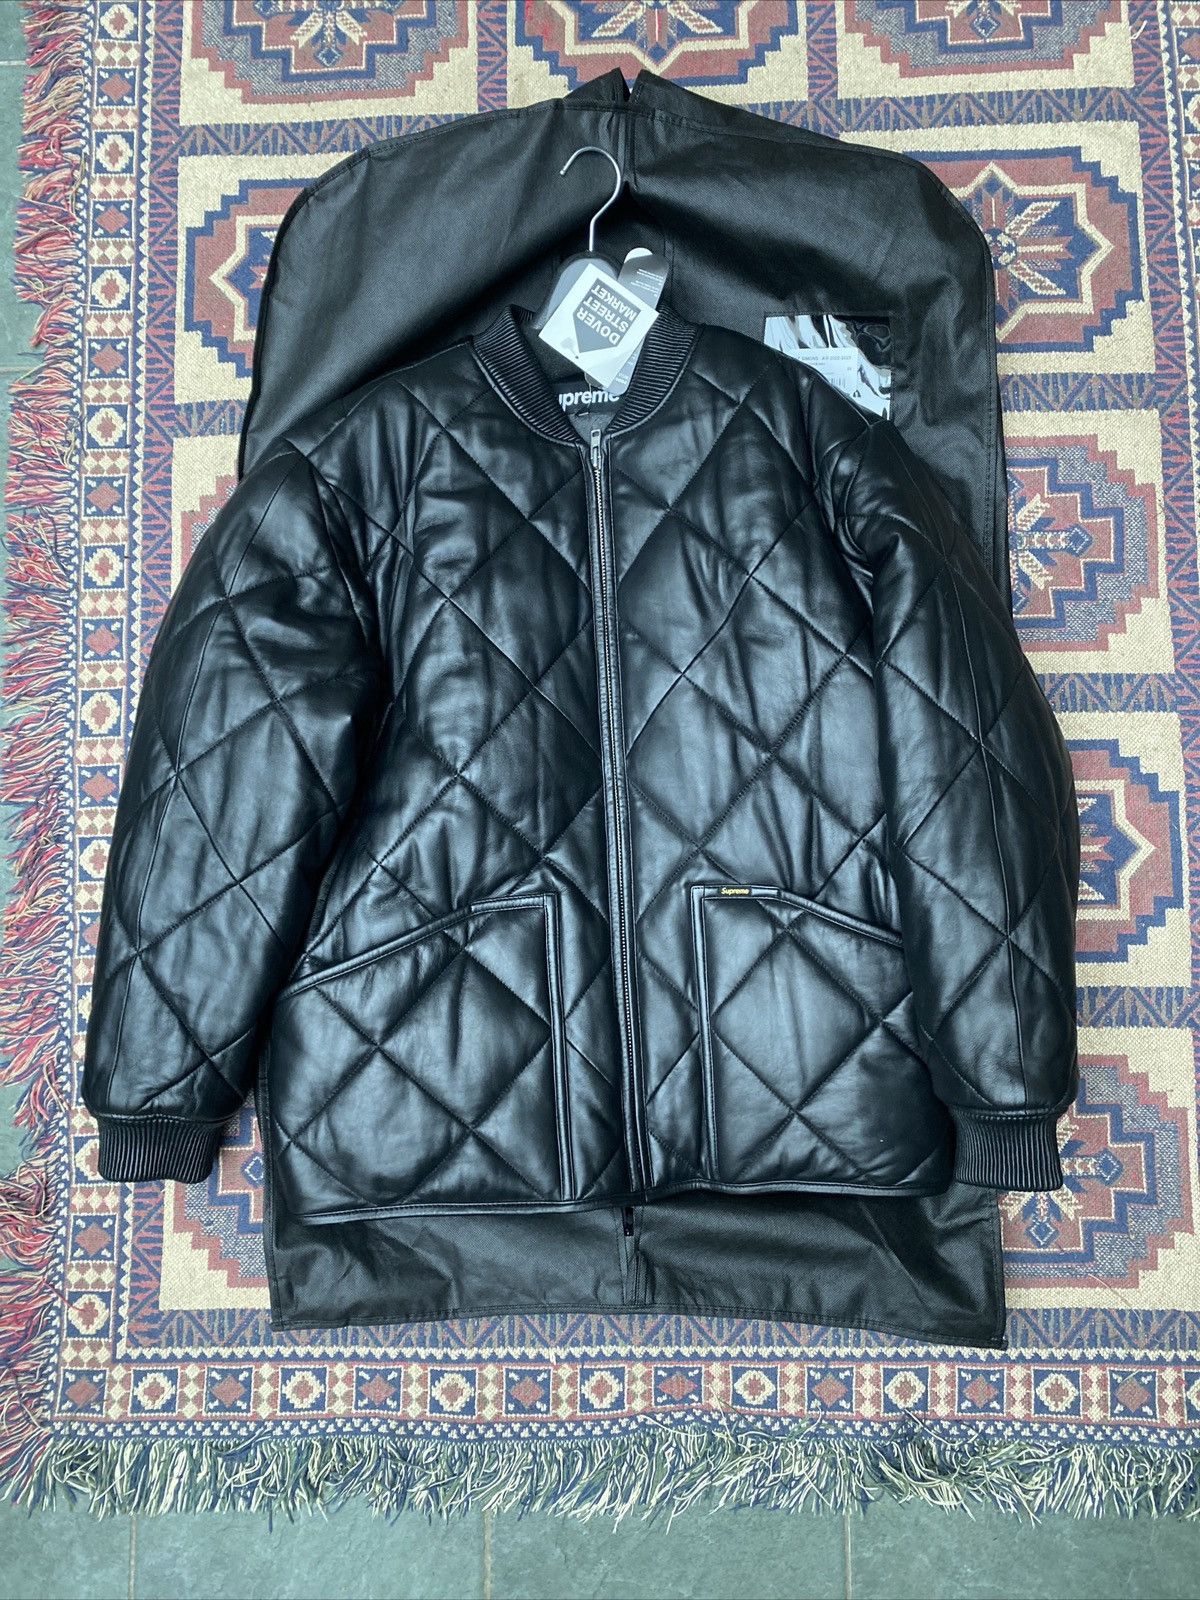 Supreme Quilted Leather Jacket XL+sobrape.com.br